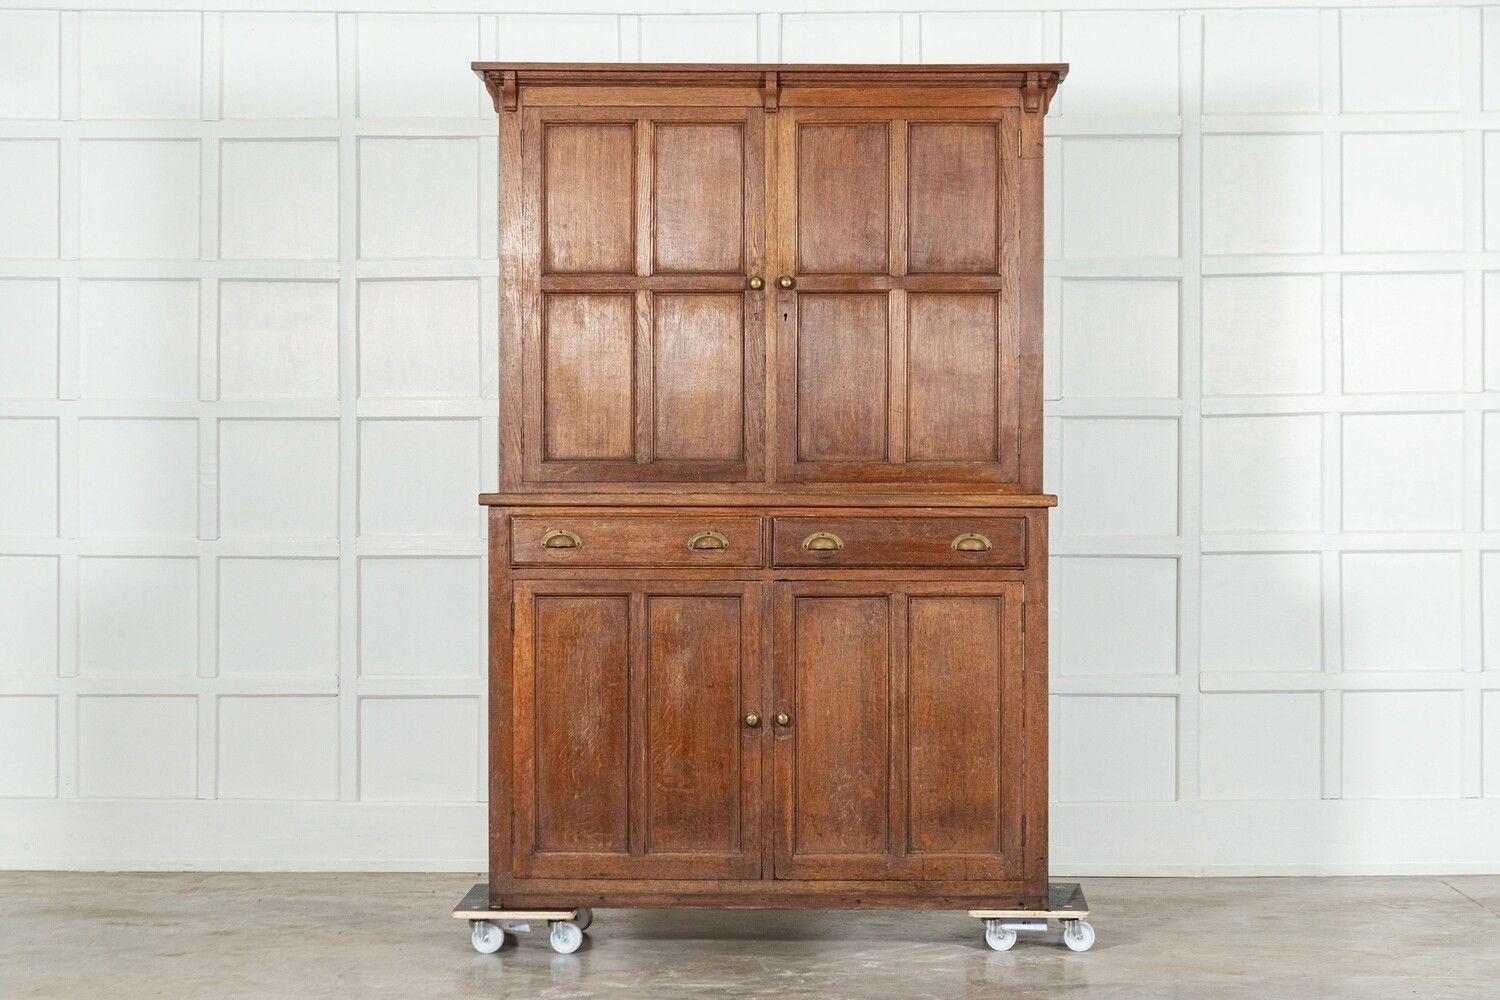 circa 1900
English Oak Housekeepers Cabinet
sku 1088
Base W139 x D51 x H100 cm
Top W147 x D31 x H106 cm
Together W147 x D51 x H206 cm
Weight 65kg